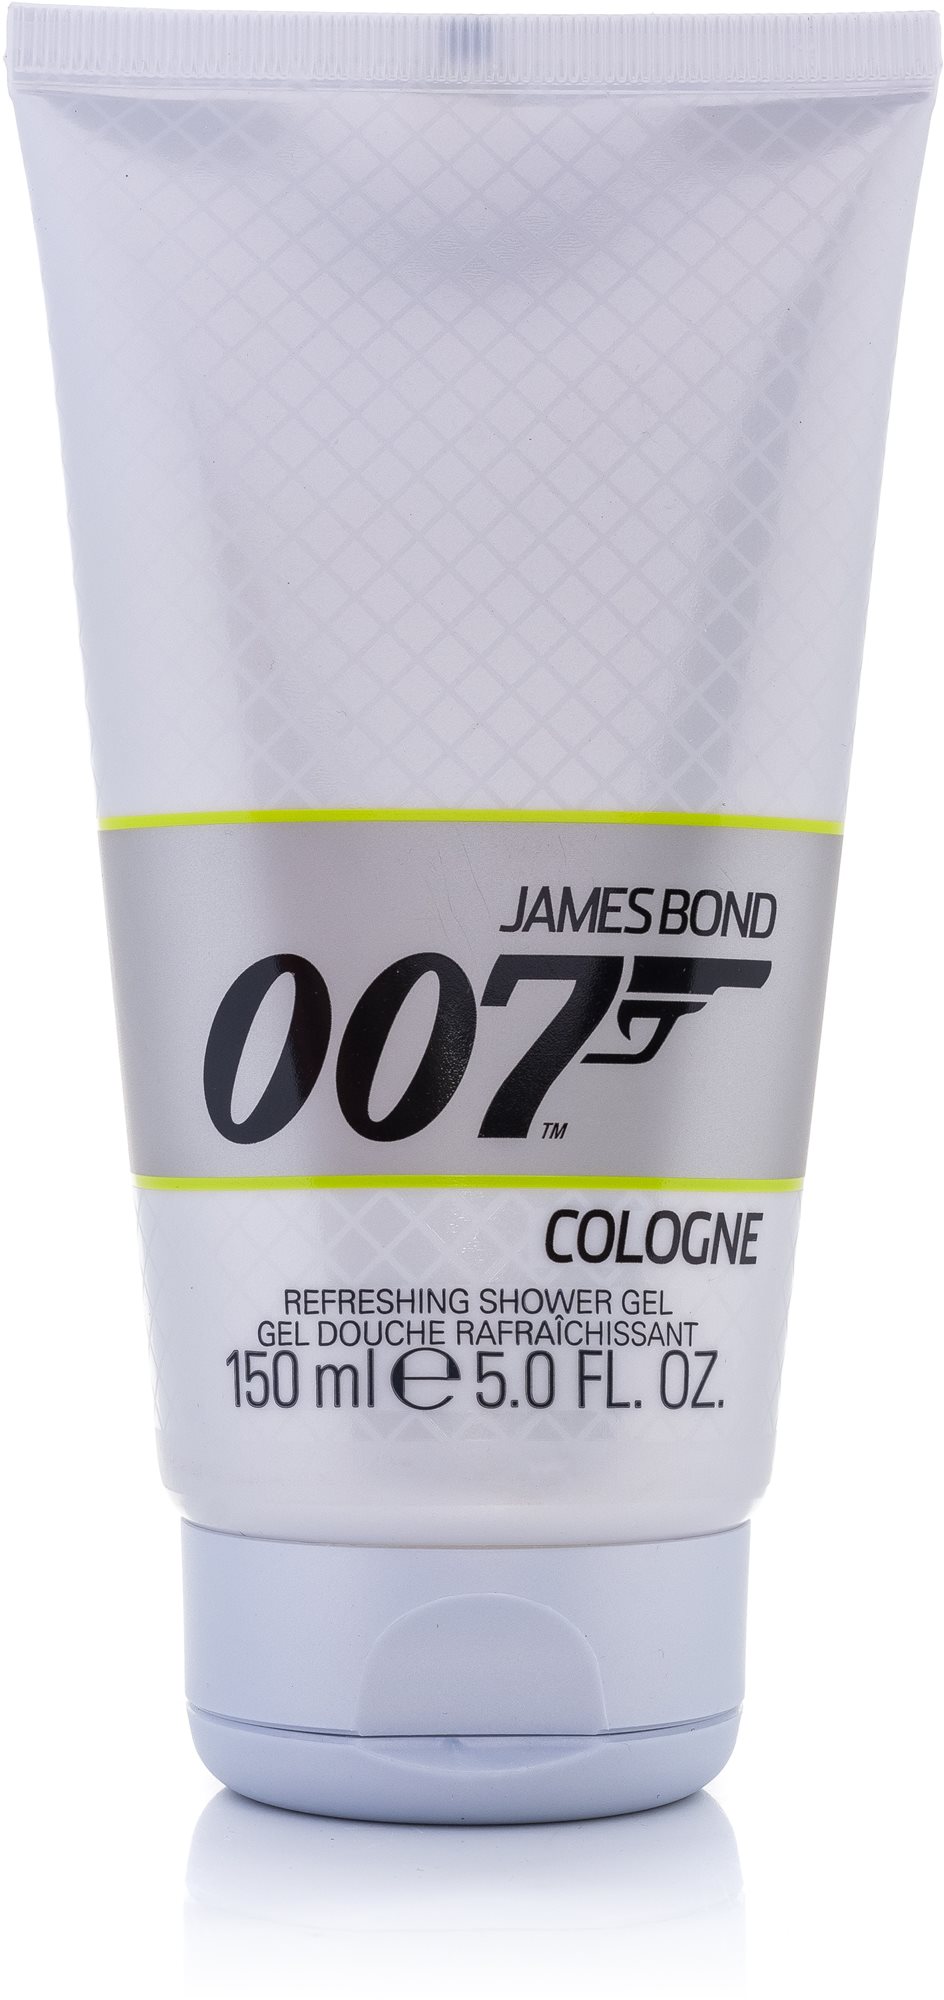 JAMES BOND 007 Cologne tusfürdő 150 ml